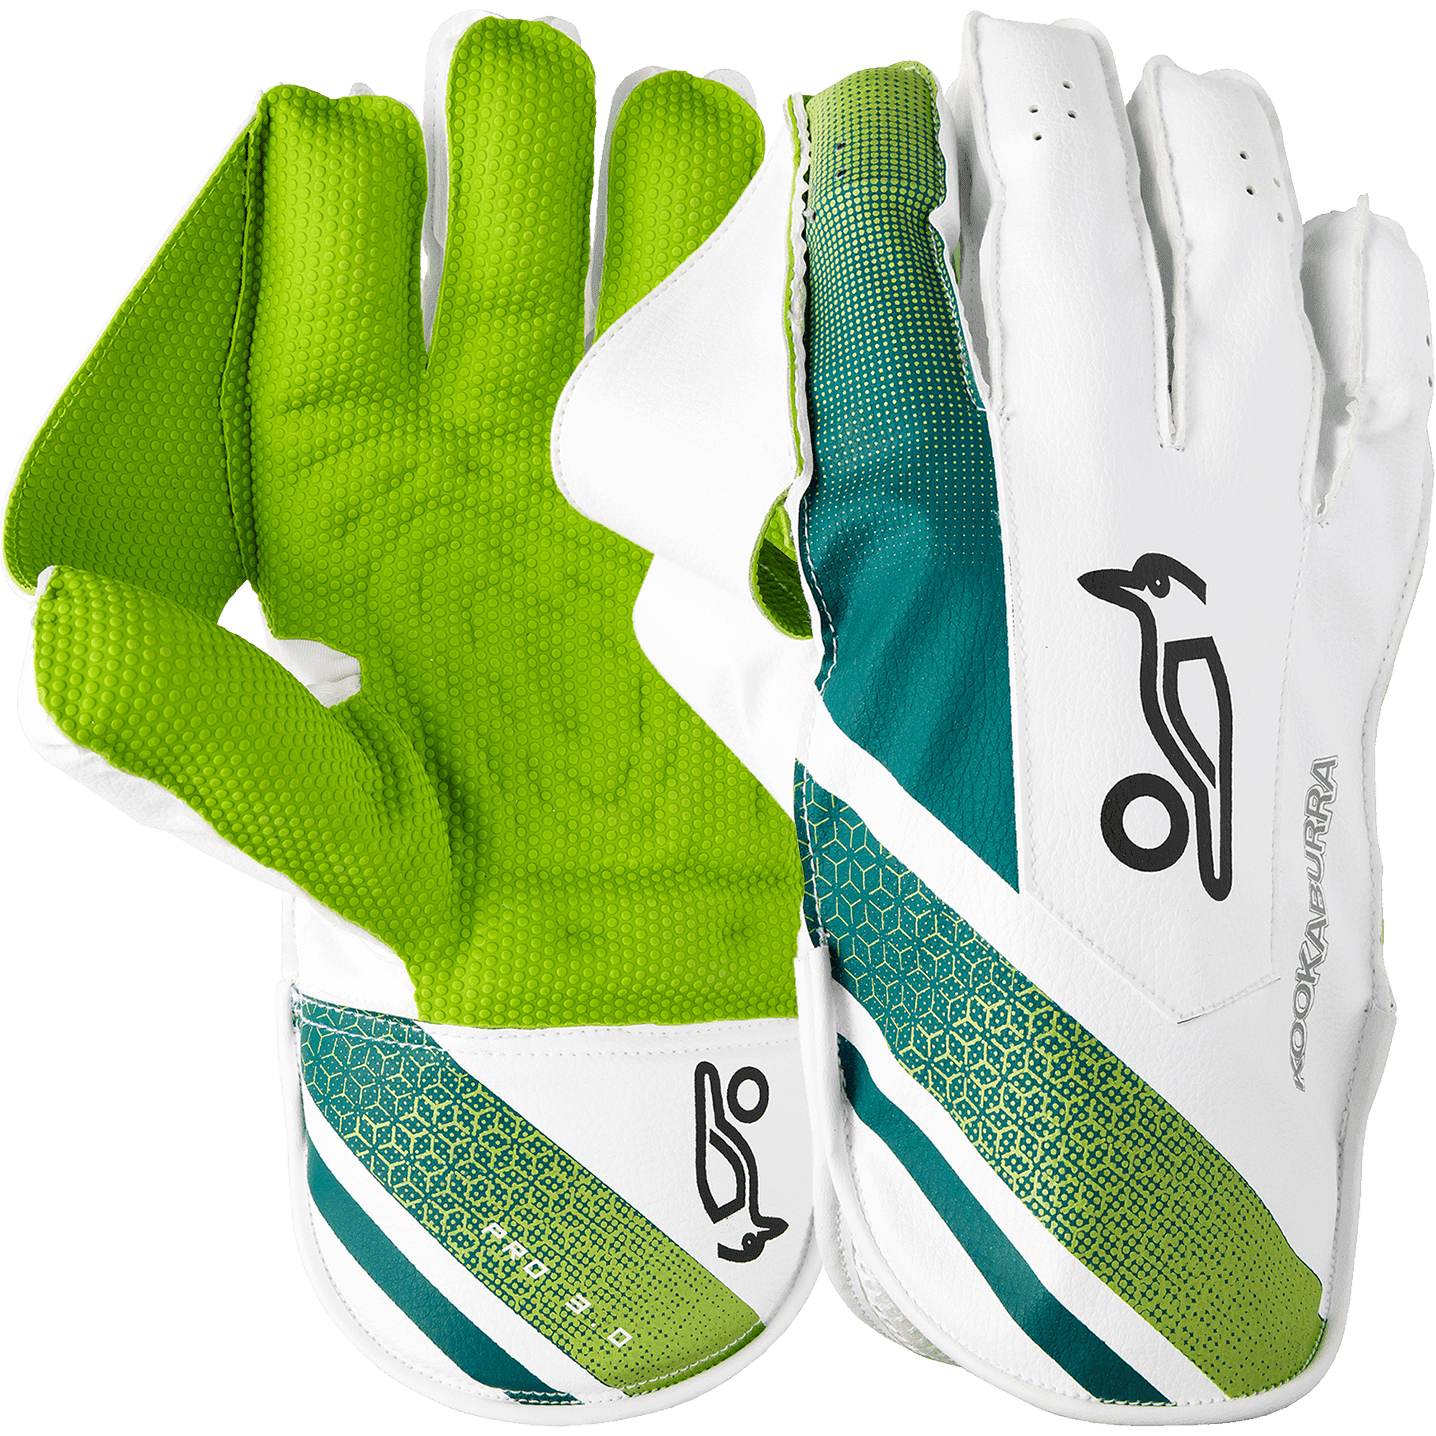 Kookaburra WicketKeeping Adult / Lime Kookaburra Kahuna Pro 3.0 Cricket Wicketkeping Gloves